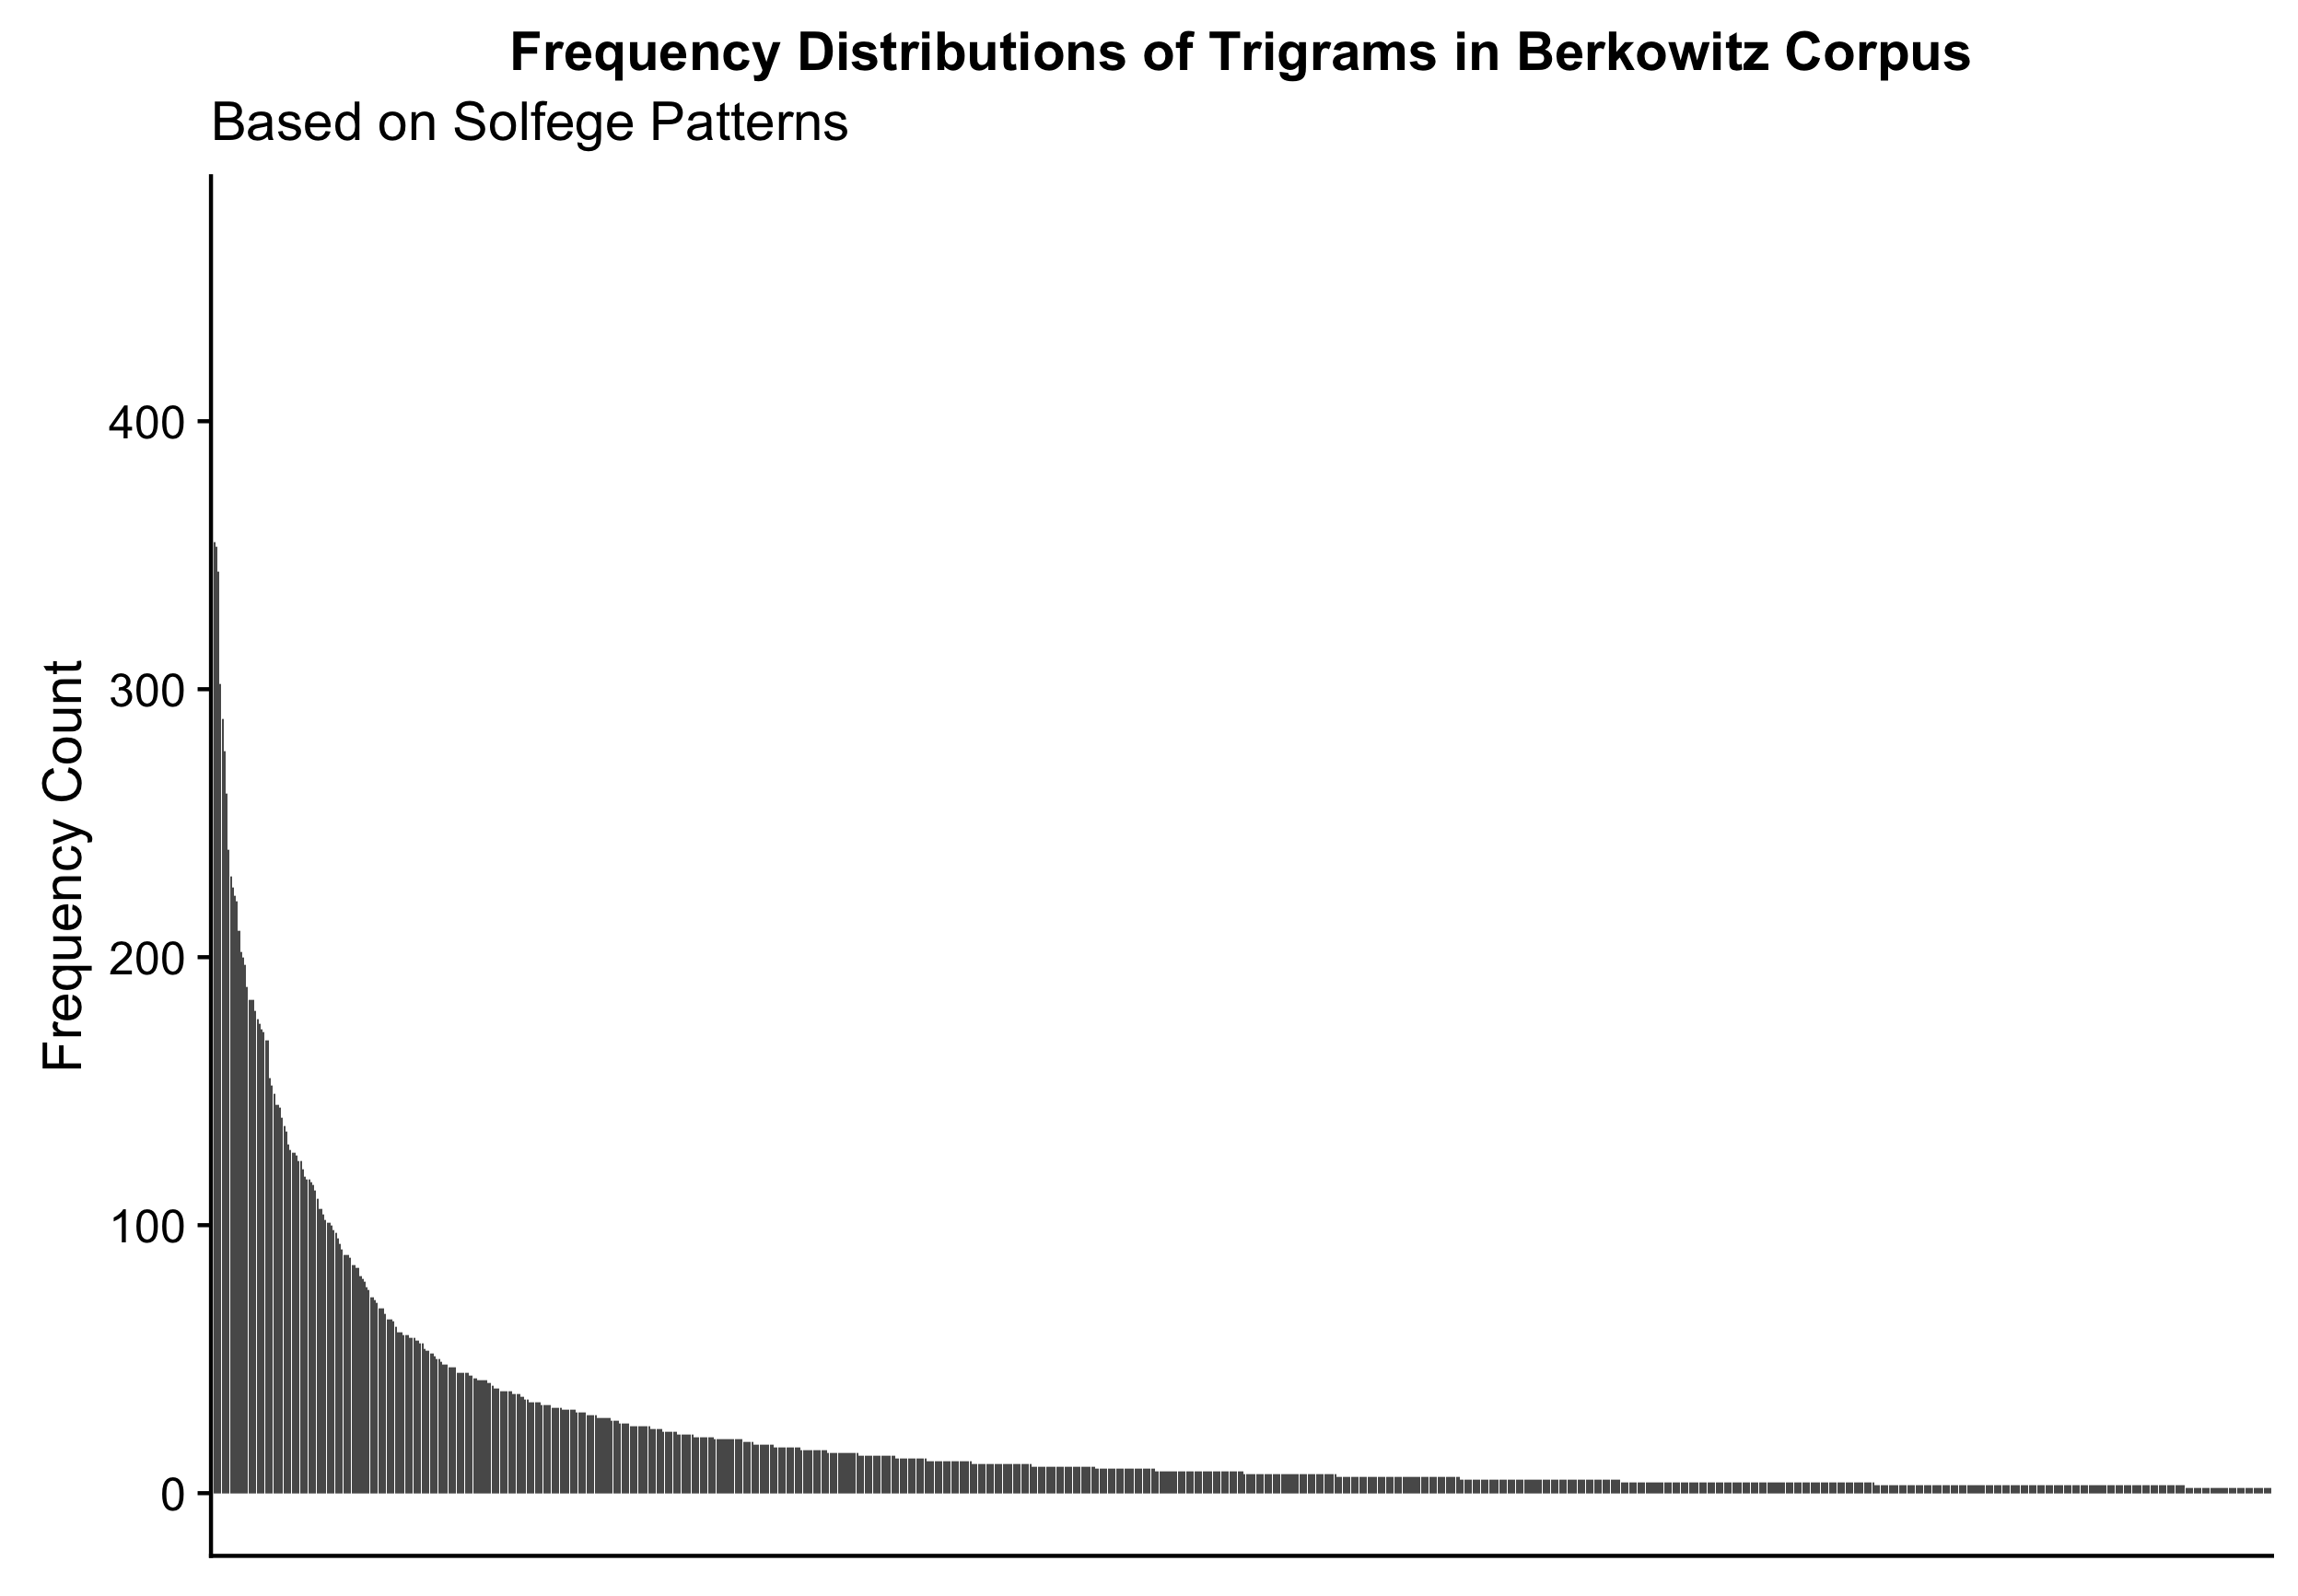 Distribution of m-grams